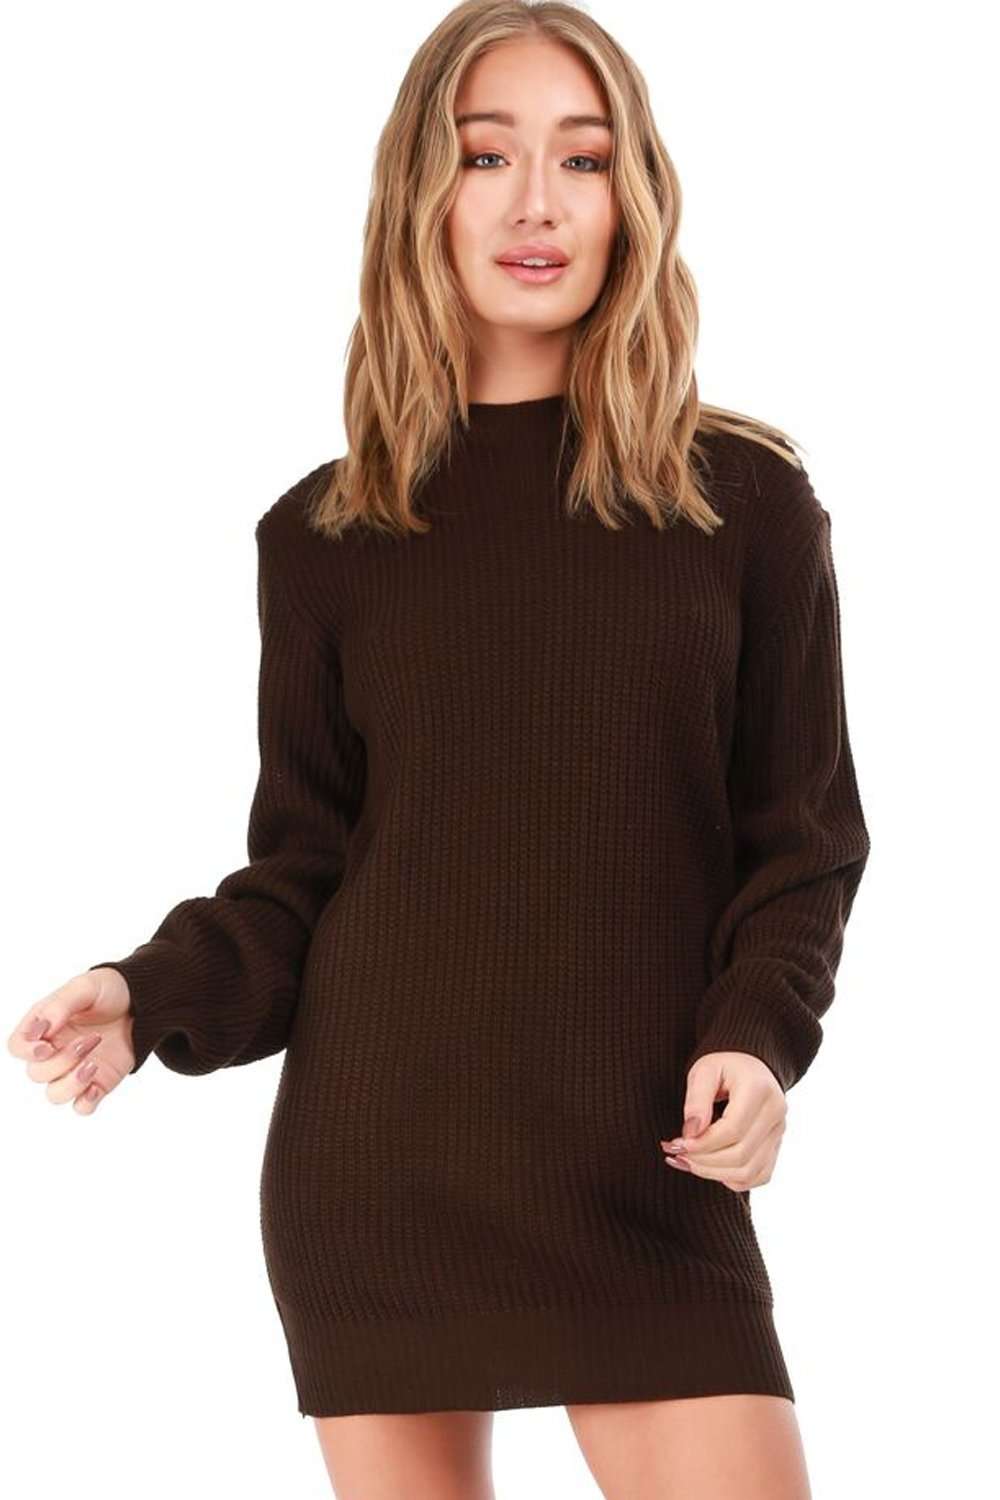 Fran Long Sleeve Oversized Knitted Jumper Dress - bejealous-com